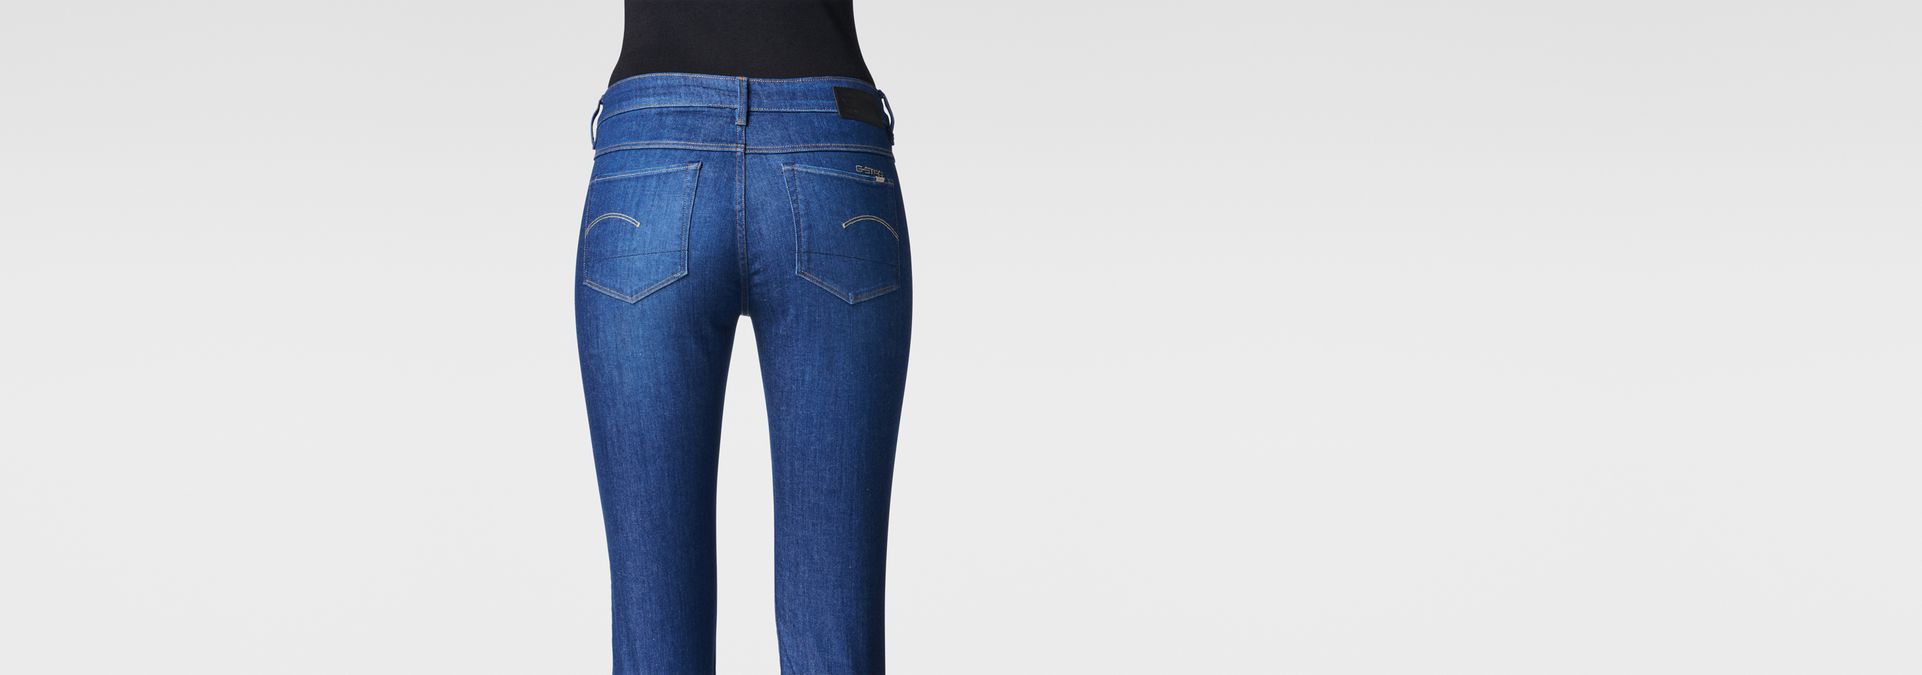 3301 contour high waist straight jeans